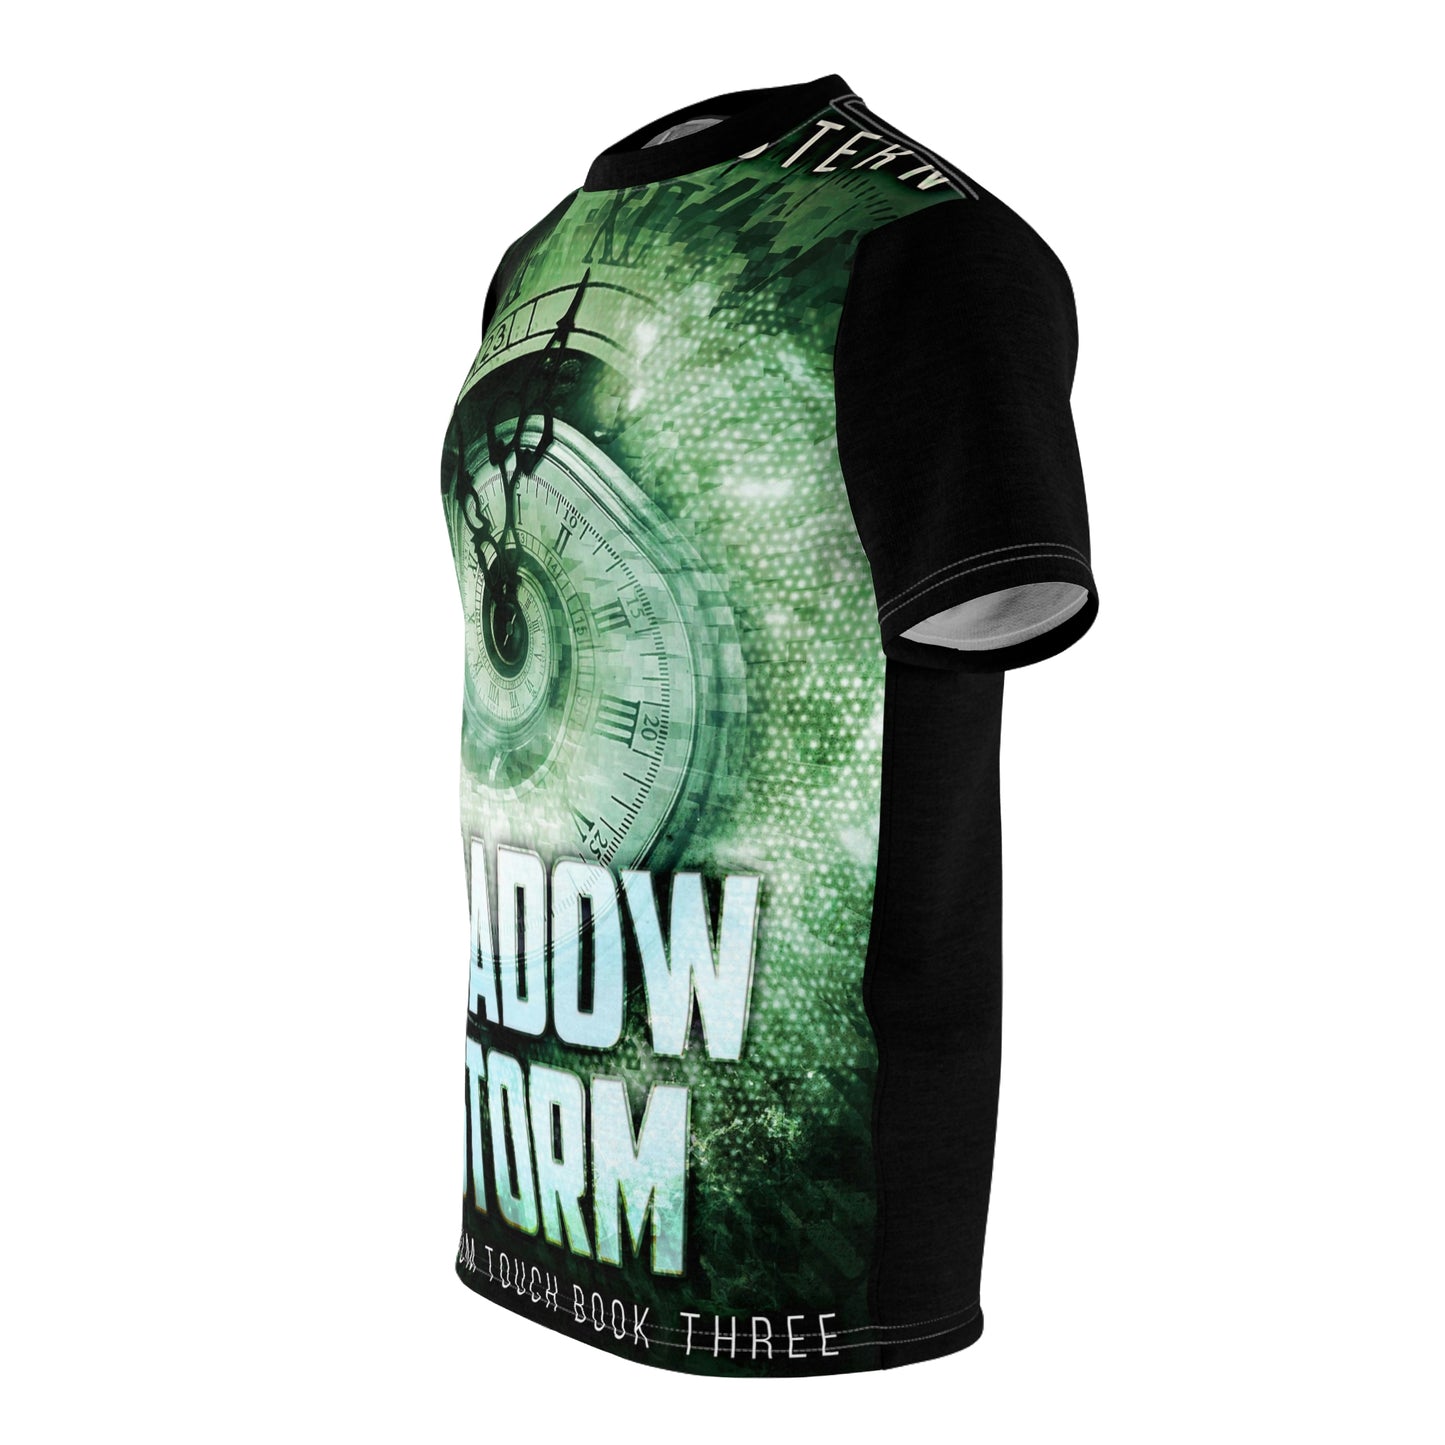 Shadow Storm - Unisex All-Over Print Cut & Sew T-Shirt